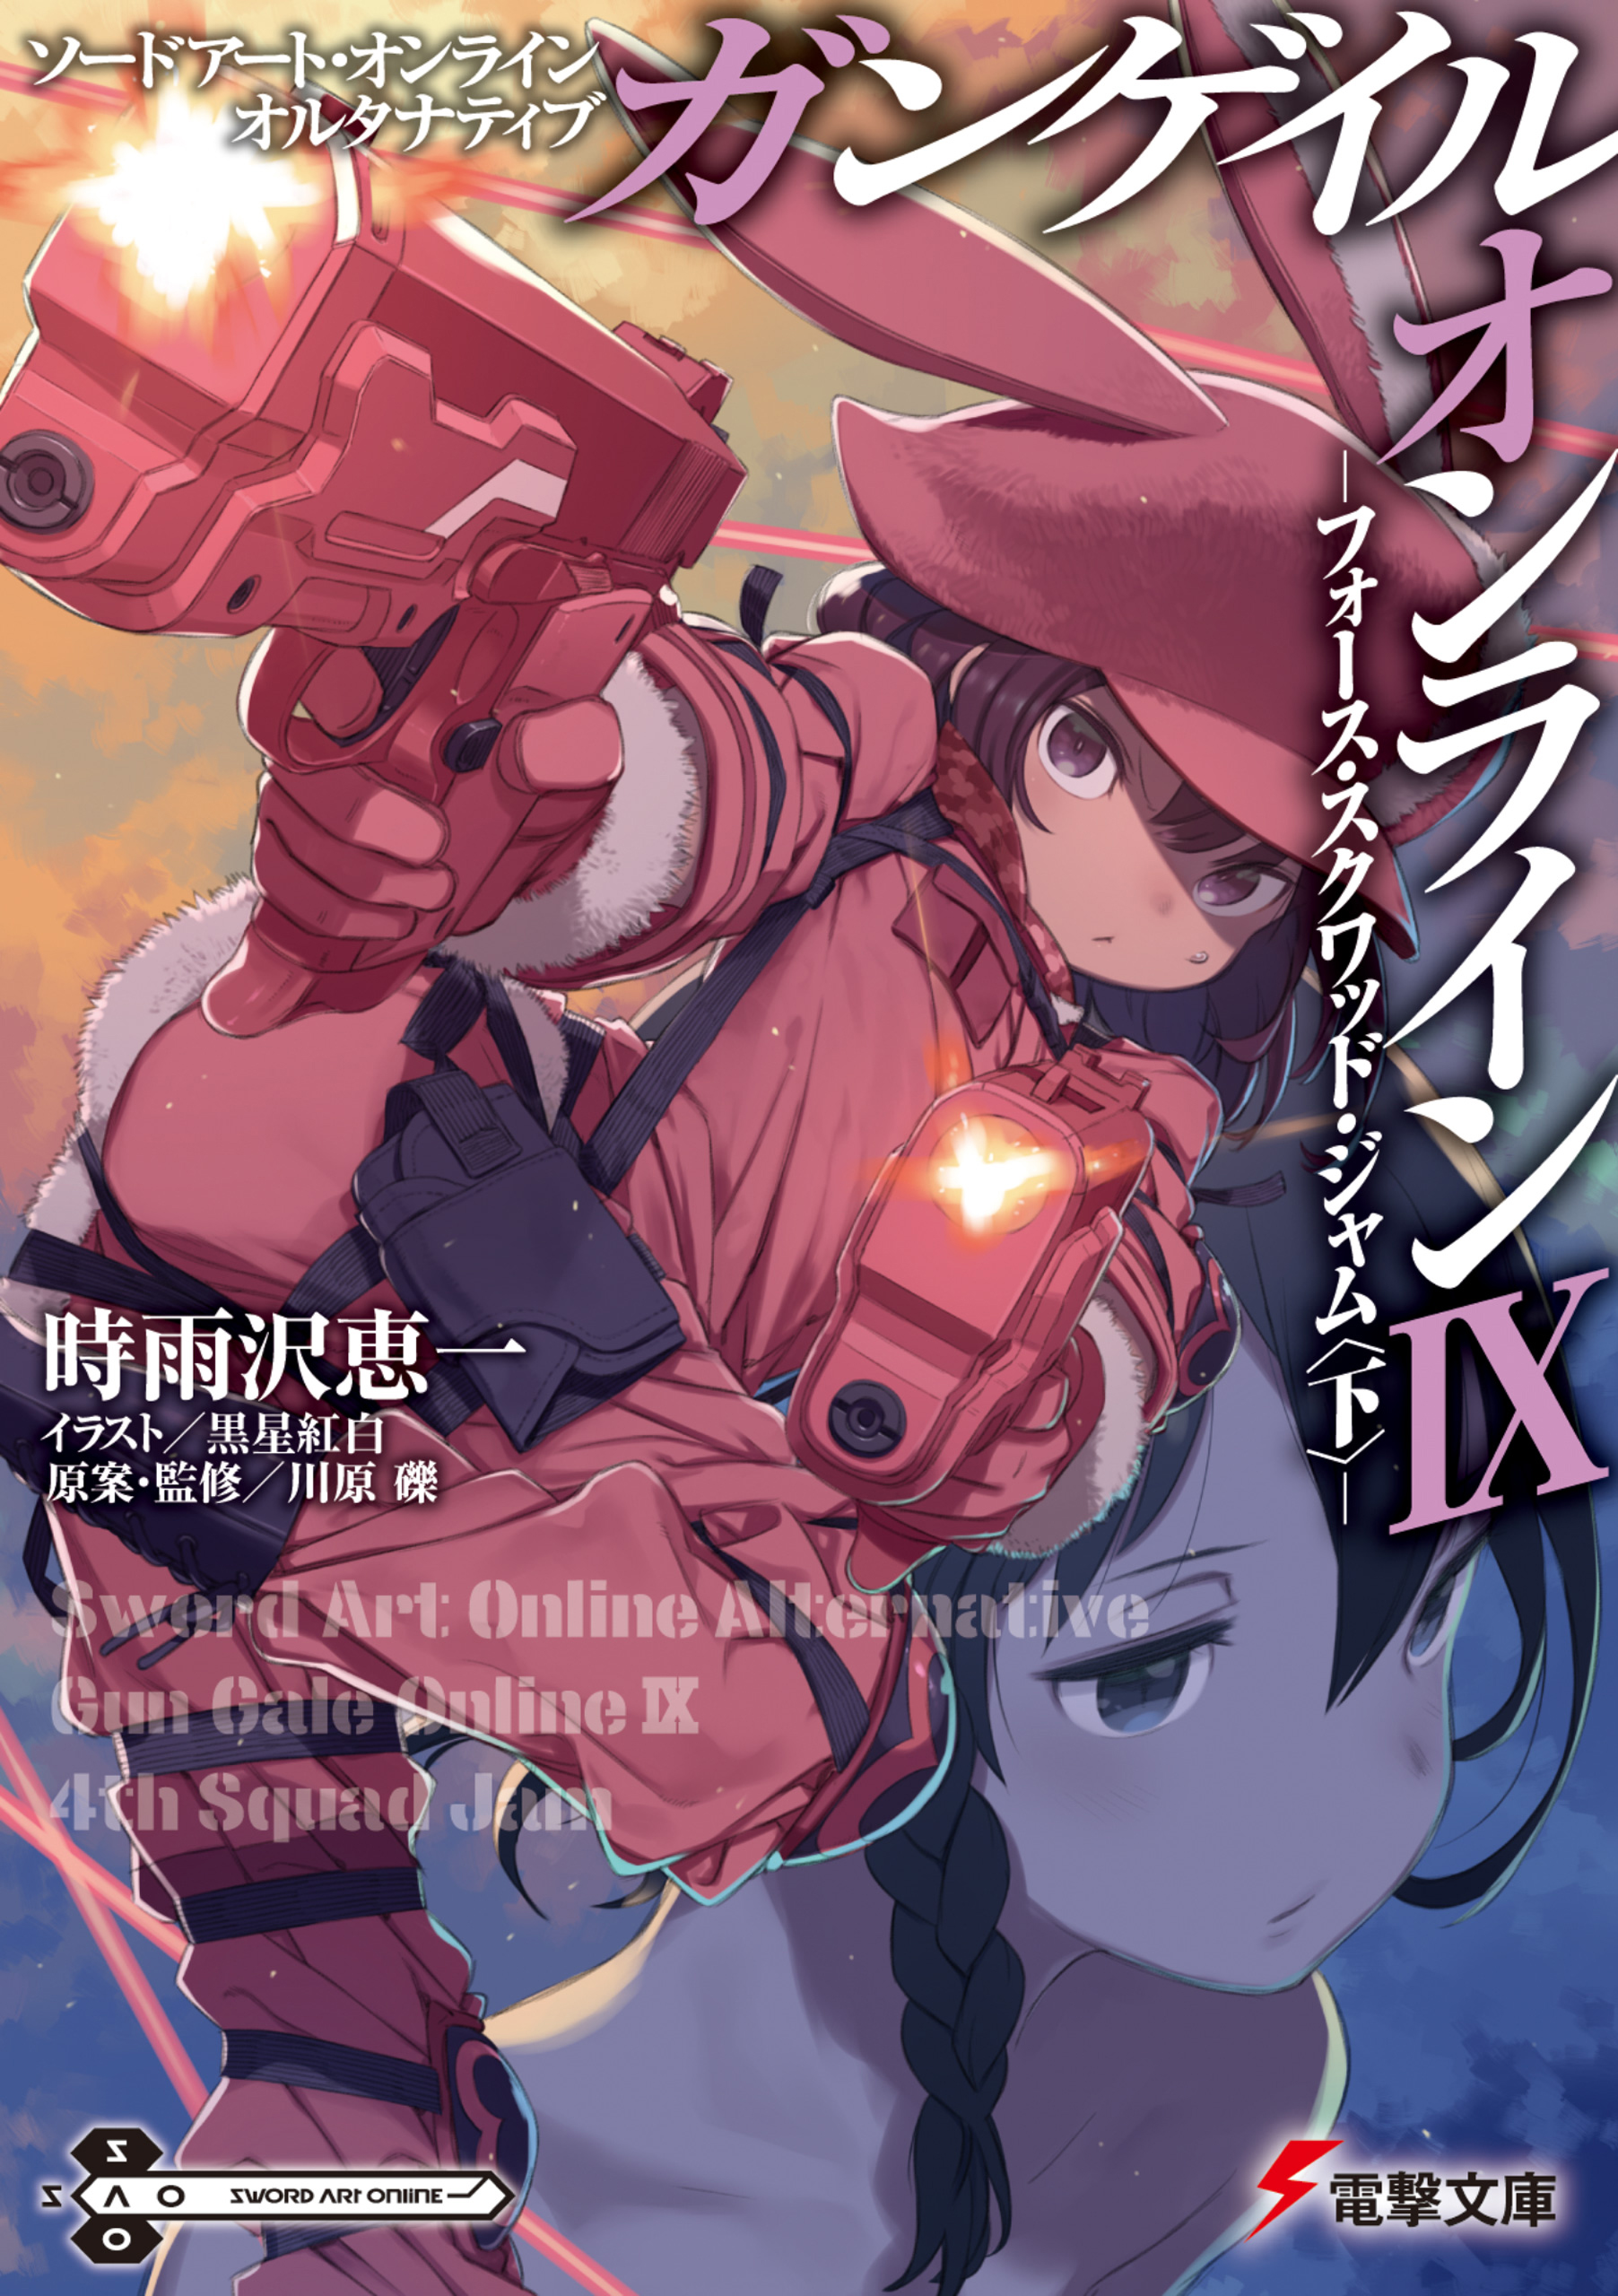 Pitohui (Sword Art Online Alternative Gun Gale Online) : r/swordartonline